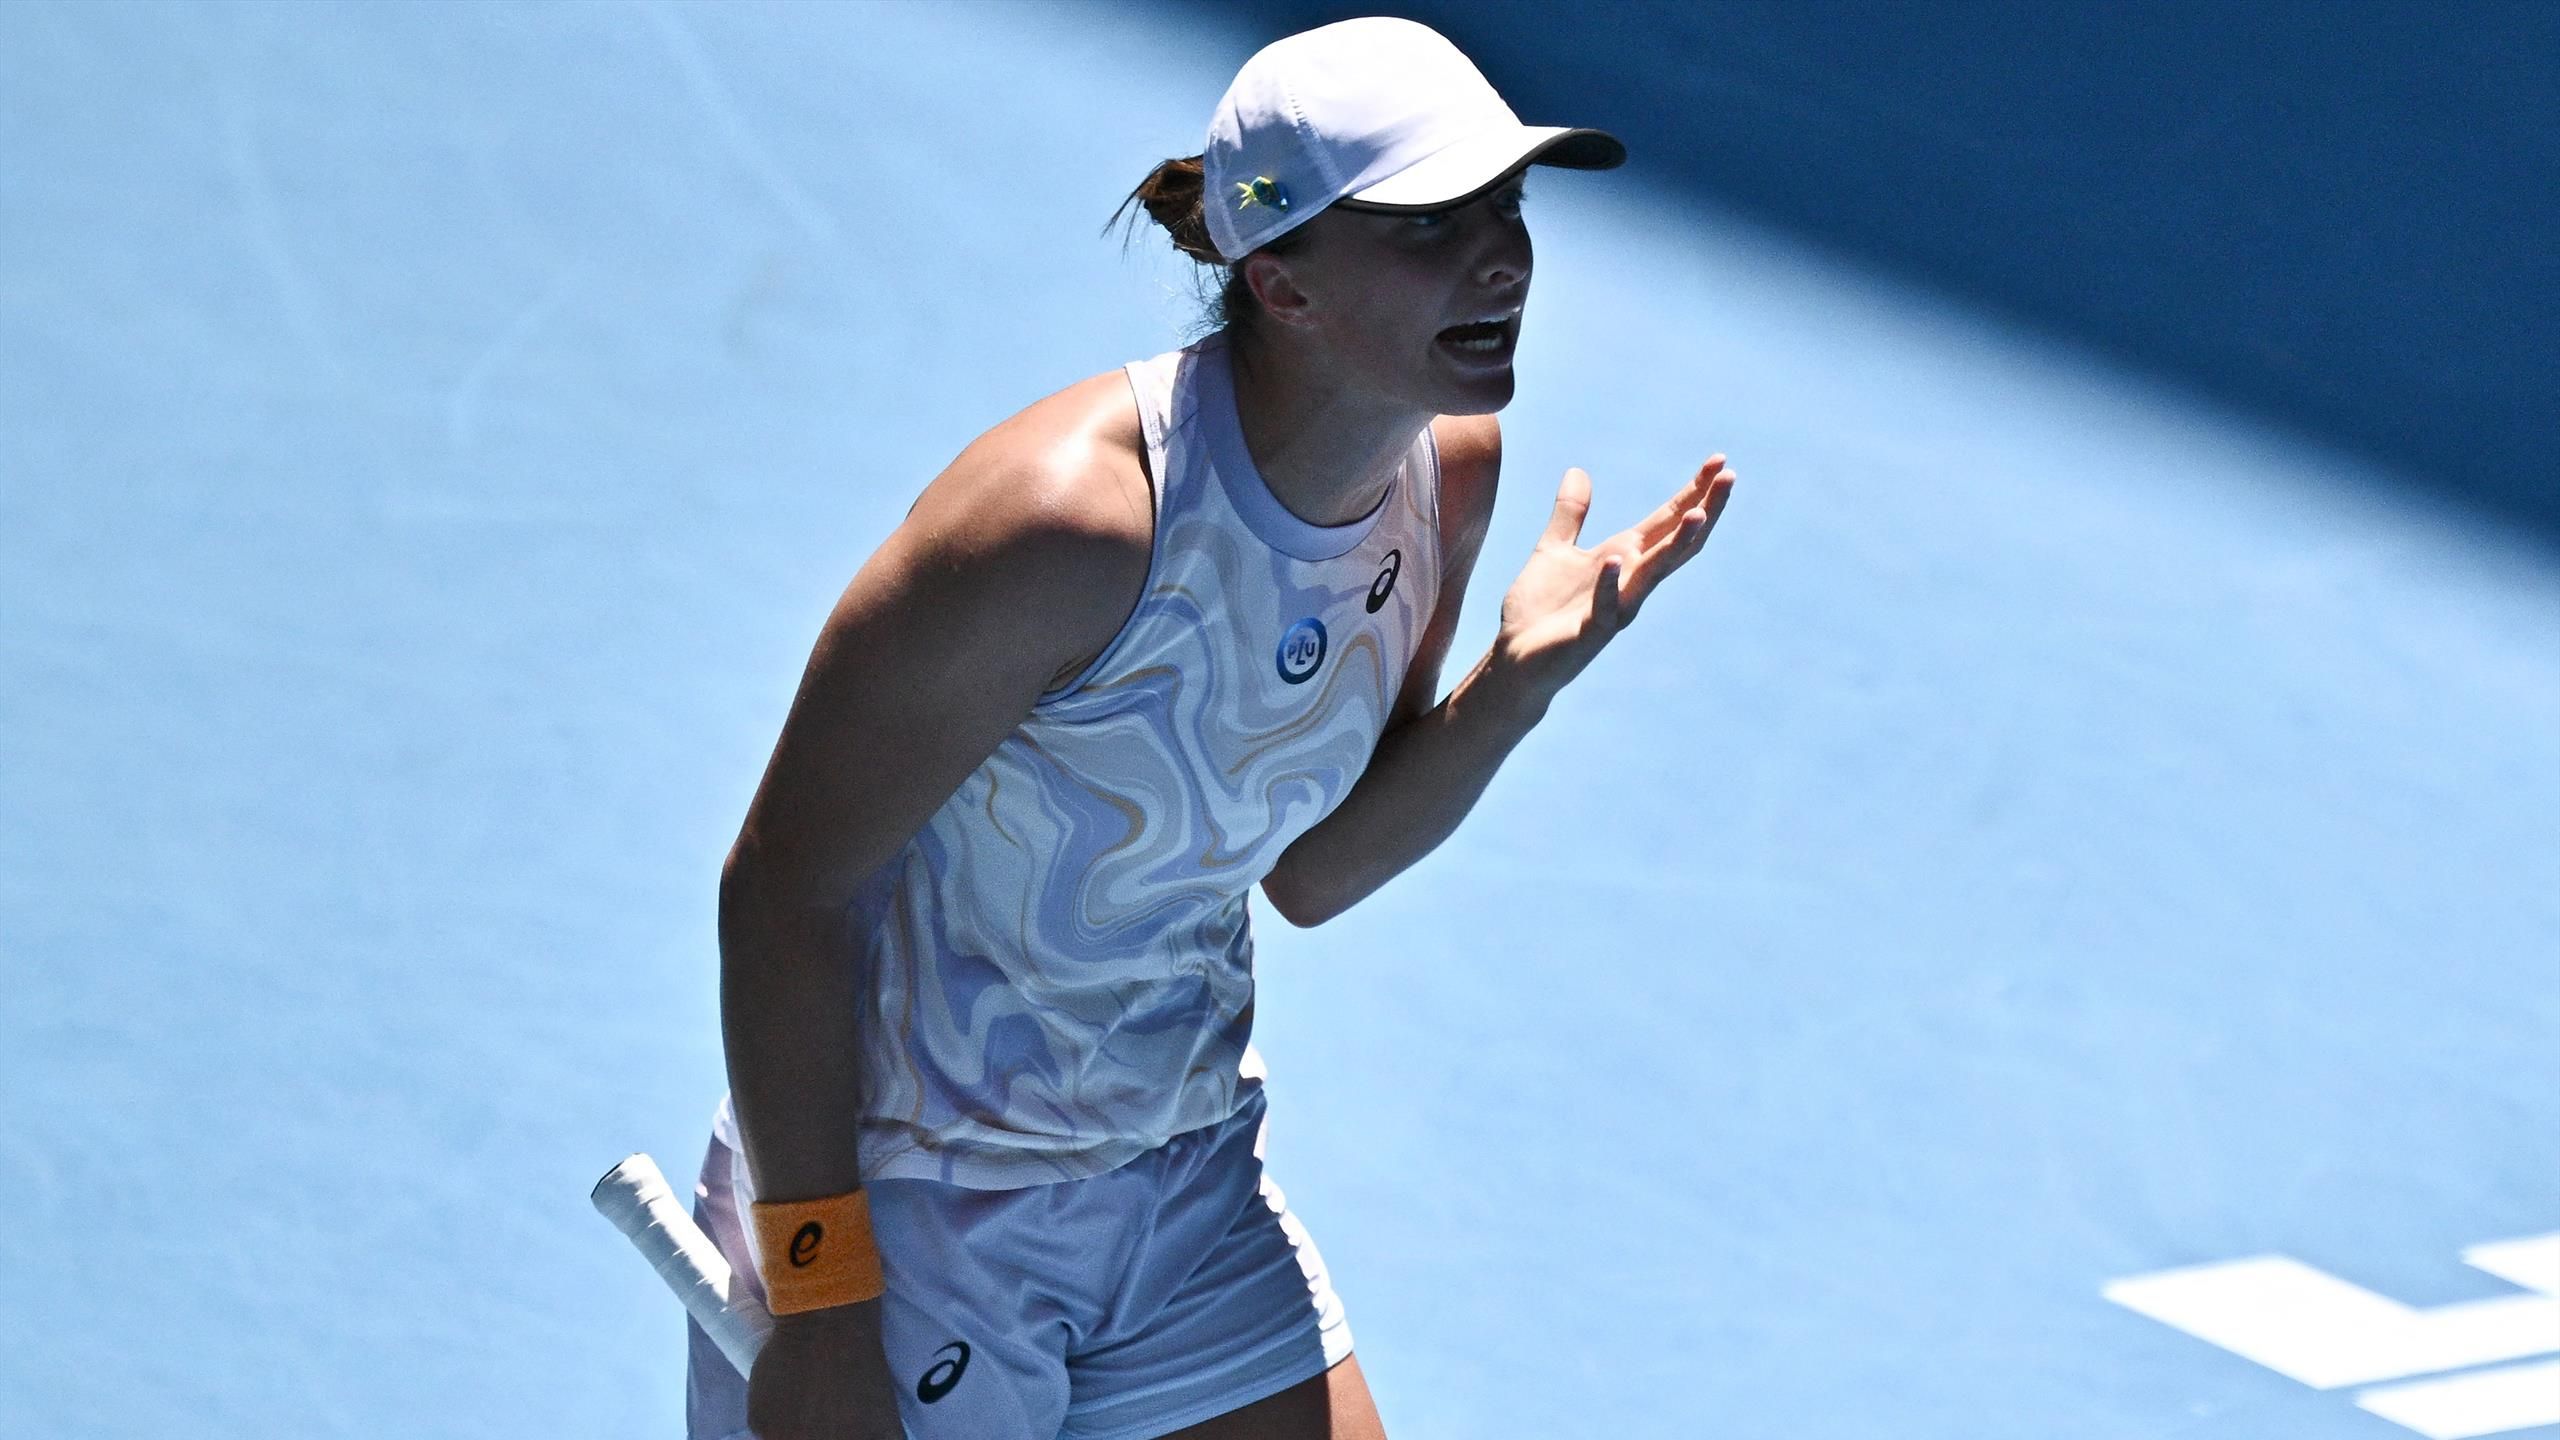 Iga Swiatek reacts to shock Elena Rybakina loss at Australian Open as top seed - I felt the pressure